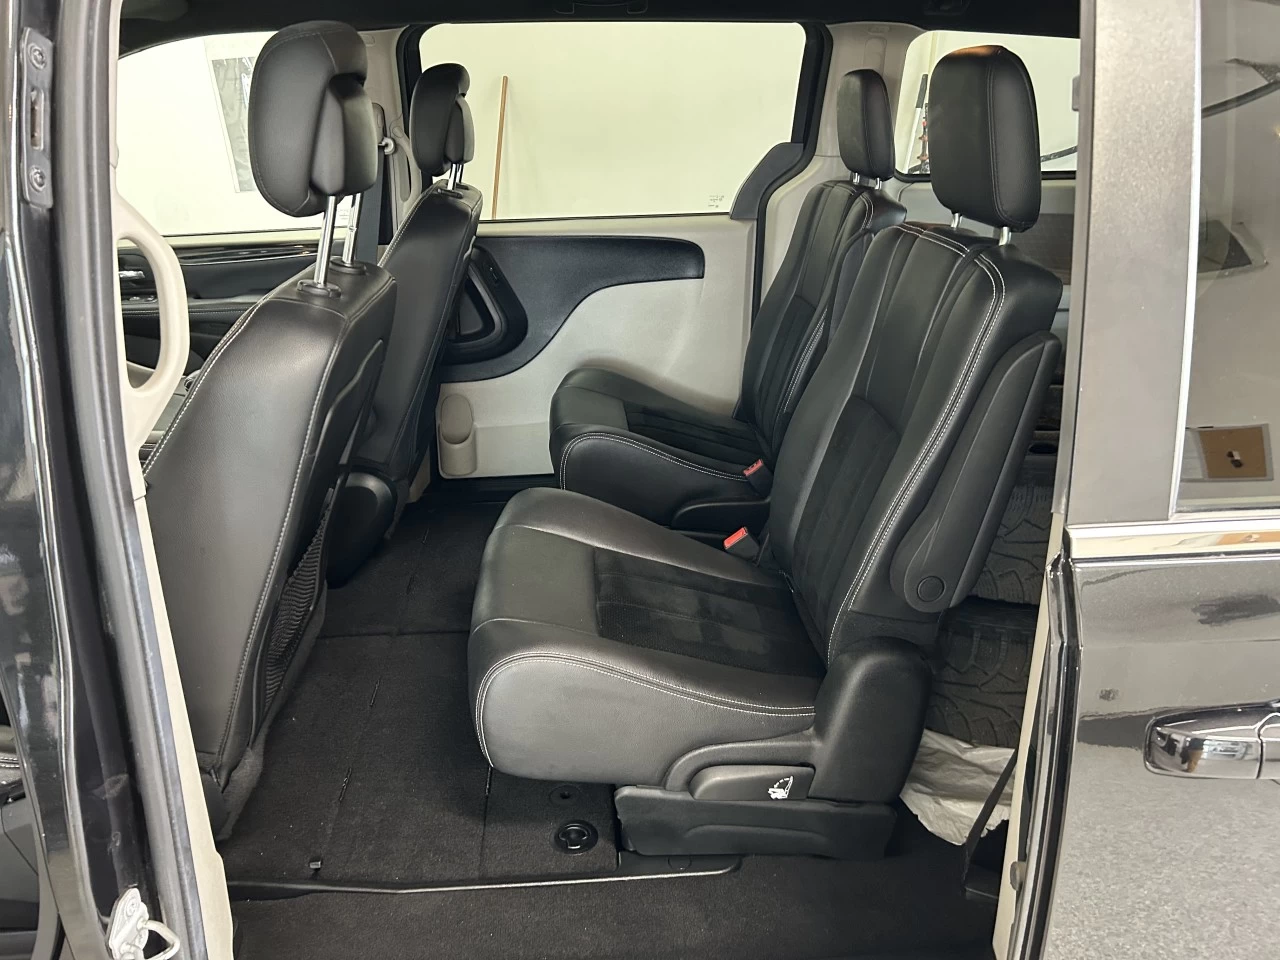 2016 Dodge Grand Caravan SXT Premium Plus Main Image